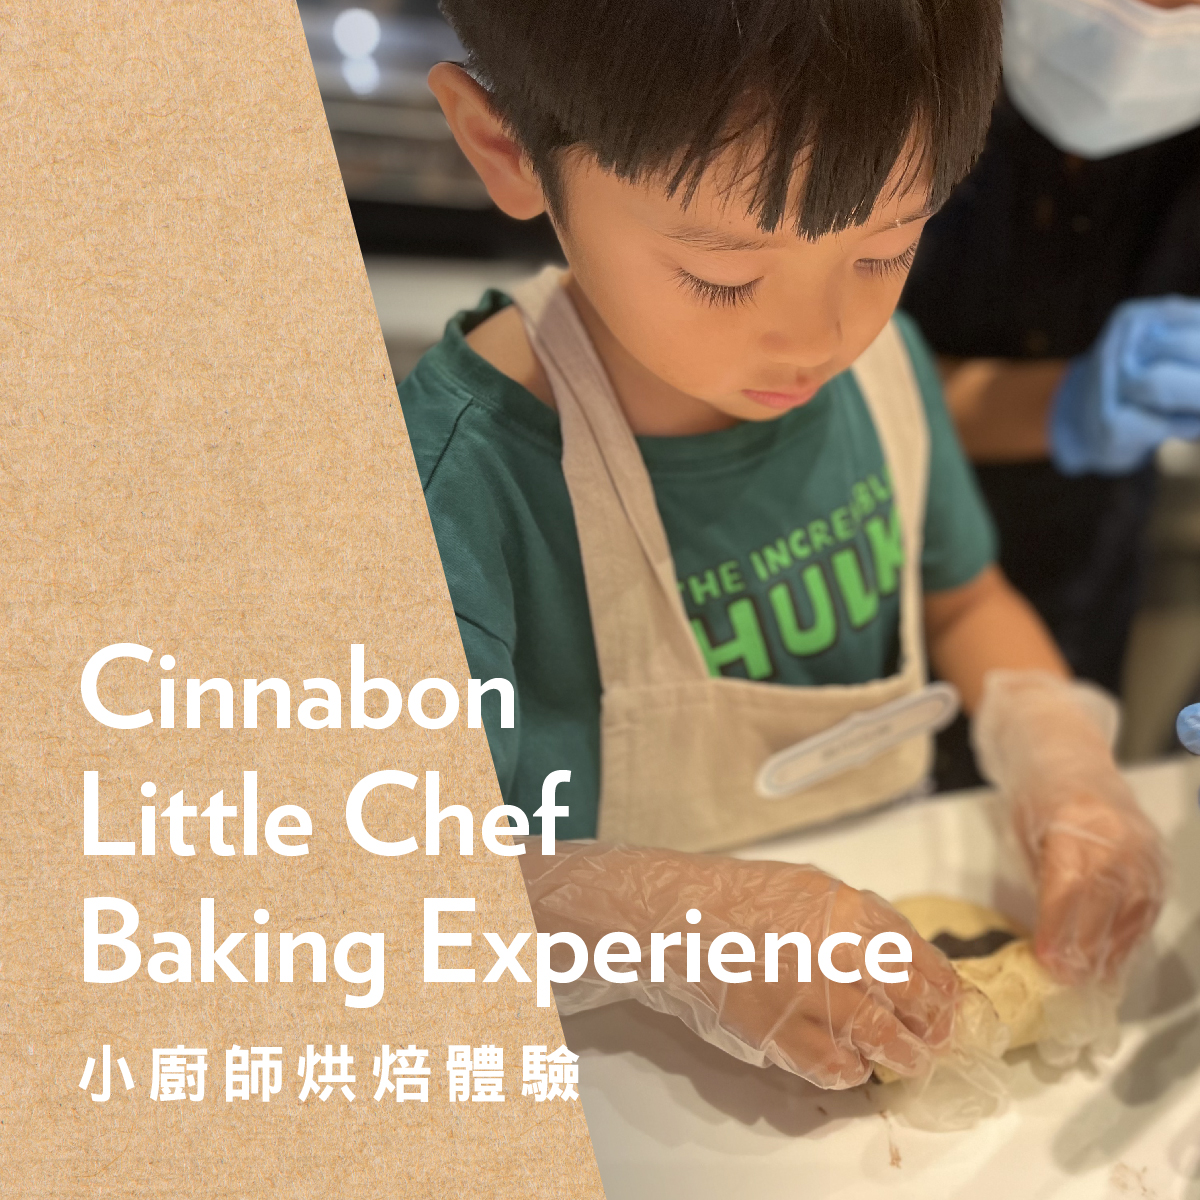 AIRSIDE Cinnabon Little Chef Baking Experience